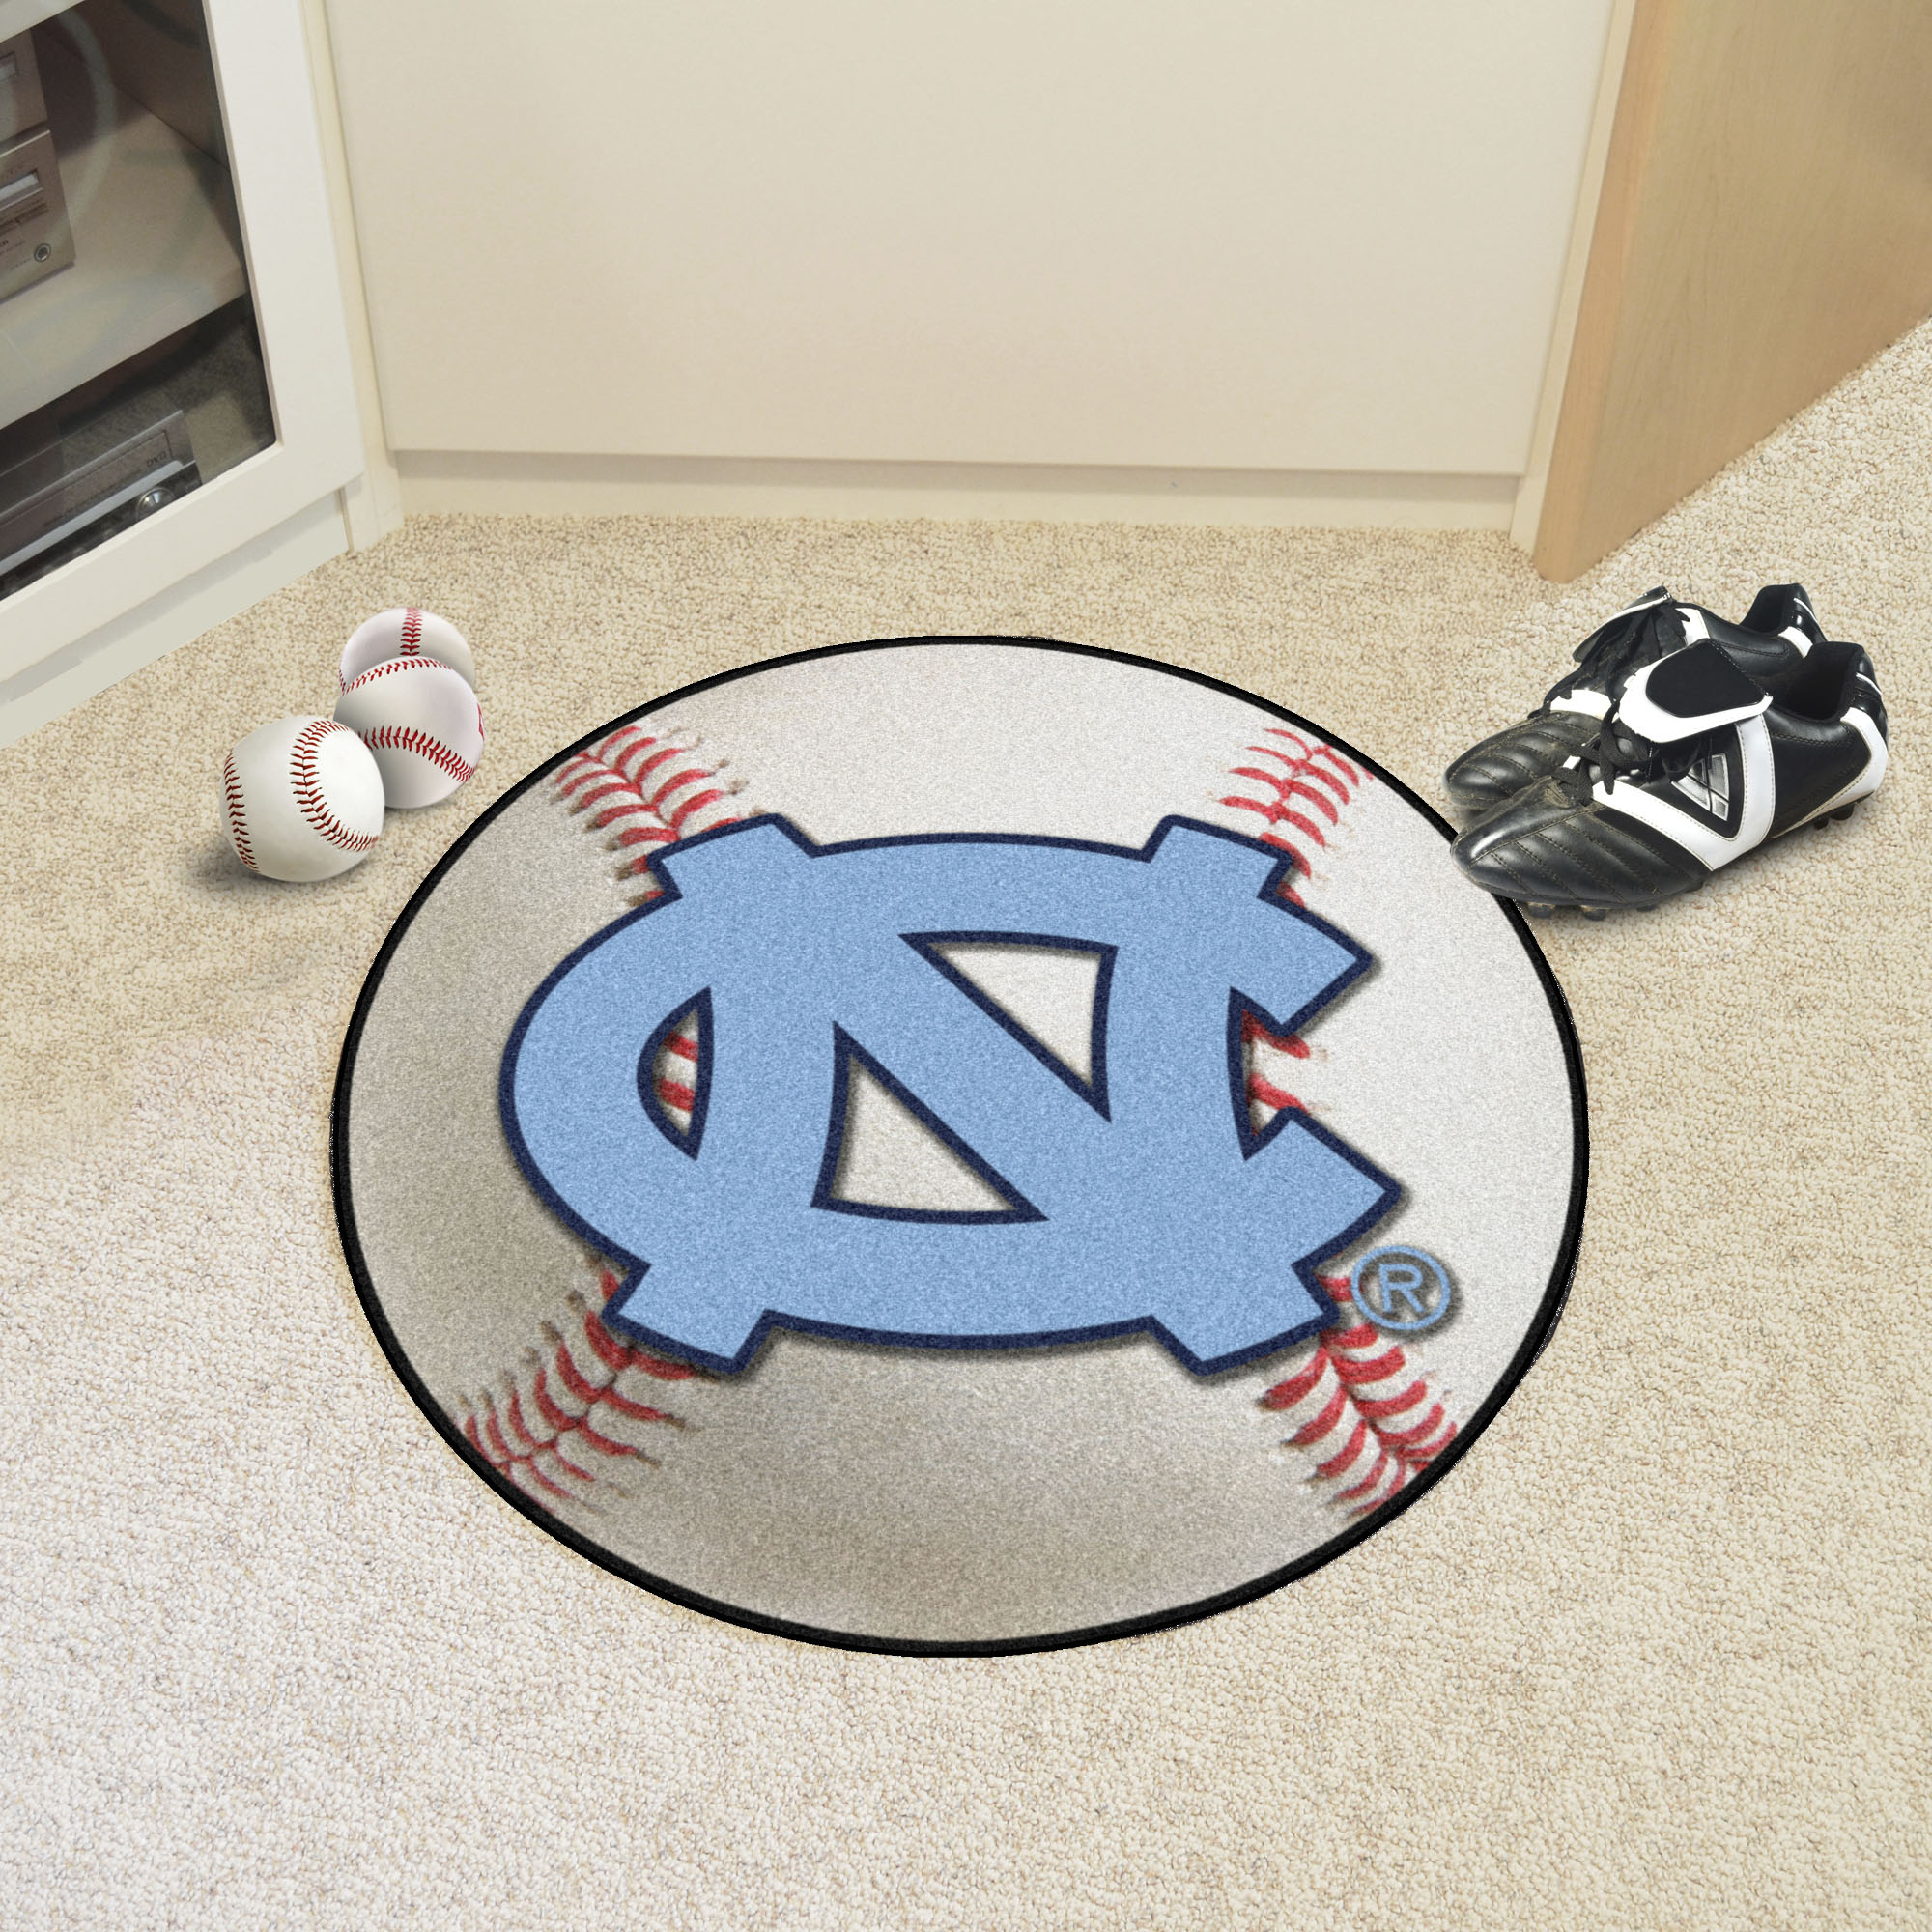 University of North Carolina Ball Shaped Area Rugs (Ball Shaped Area Rugs: Baseball)